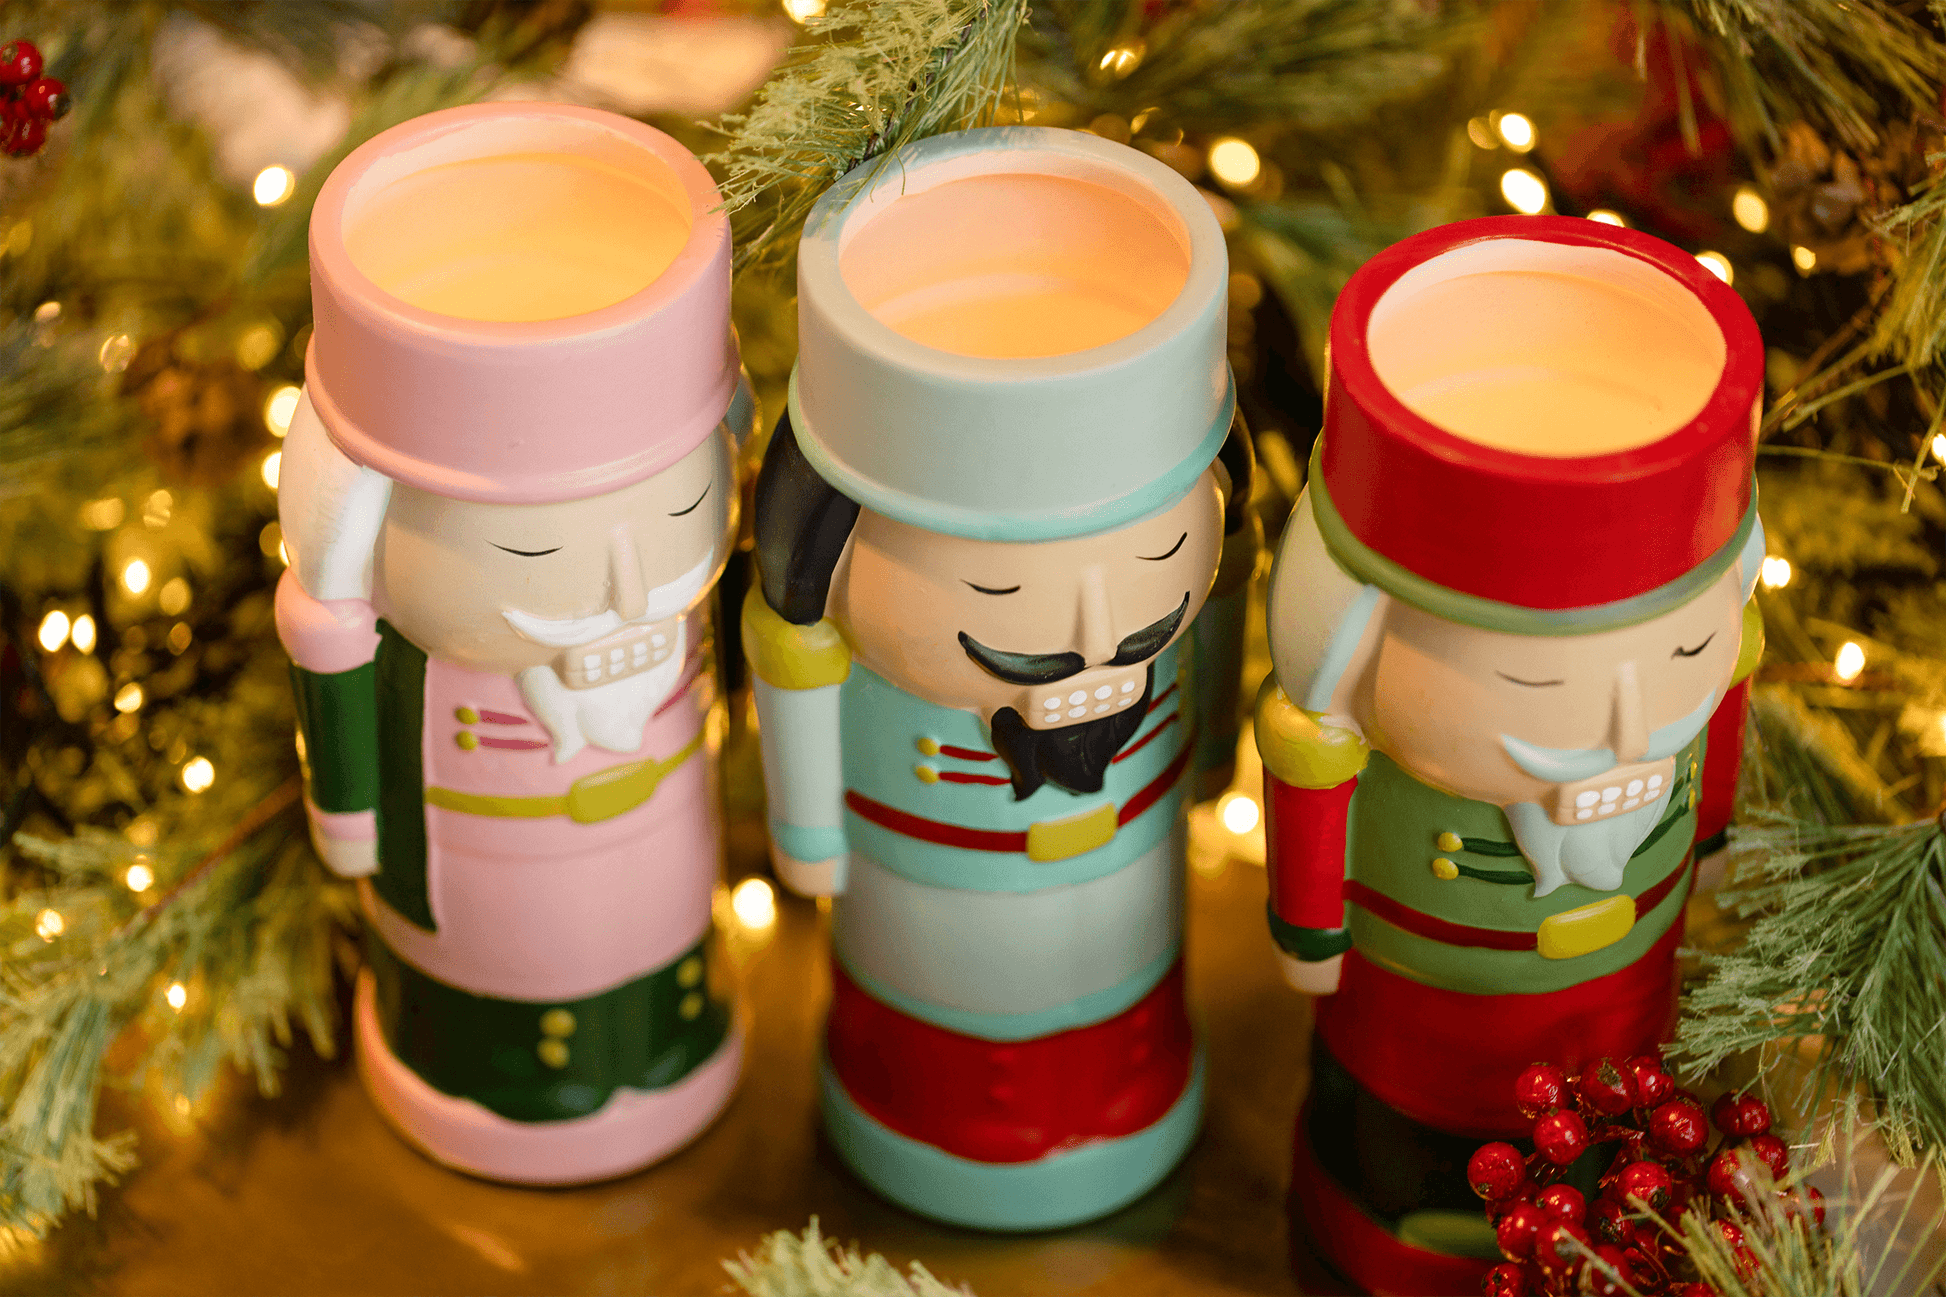 Nutcracker Candles lit with Christmas decor